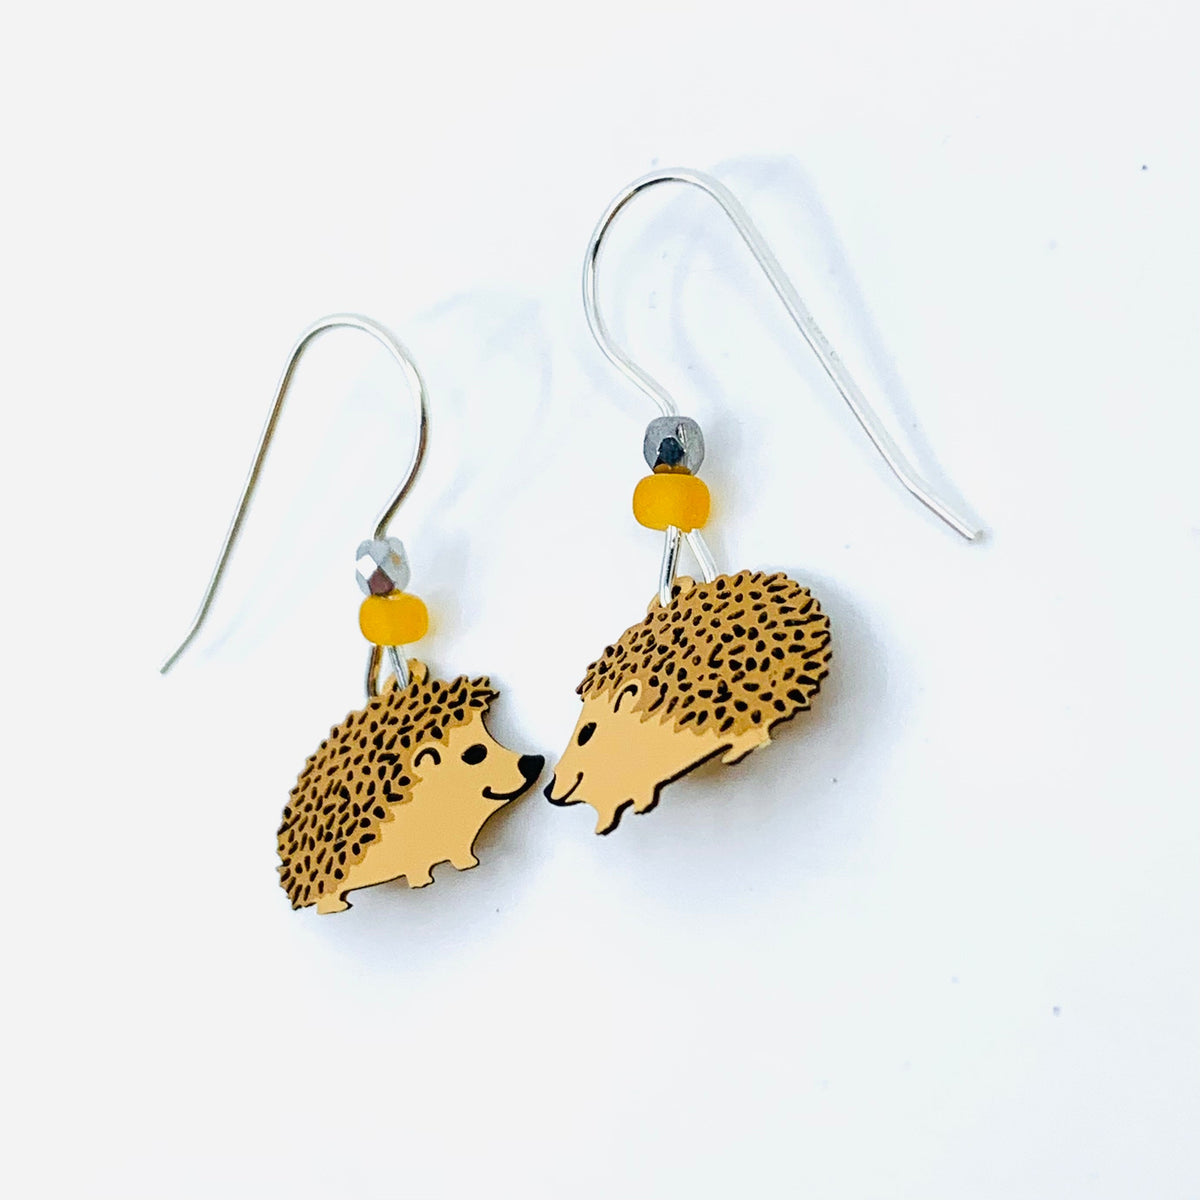 Tiny Whimsical Earrings, Hedgehog Sienna Sky 